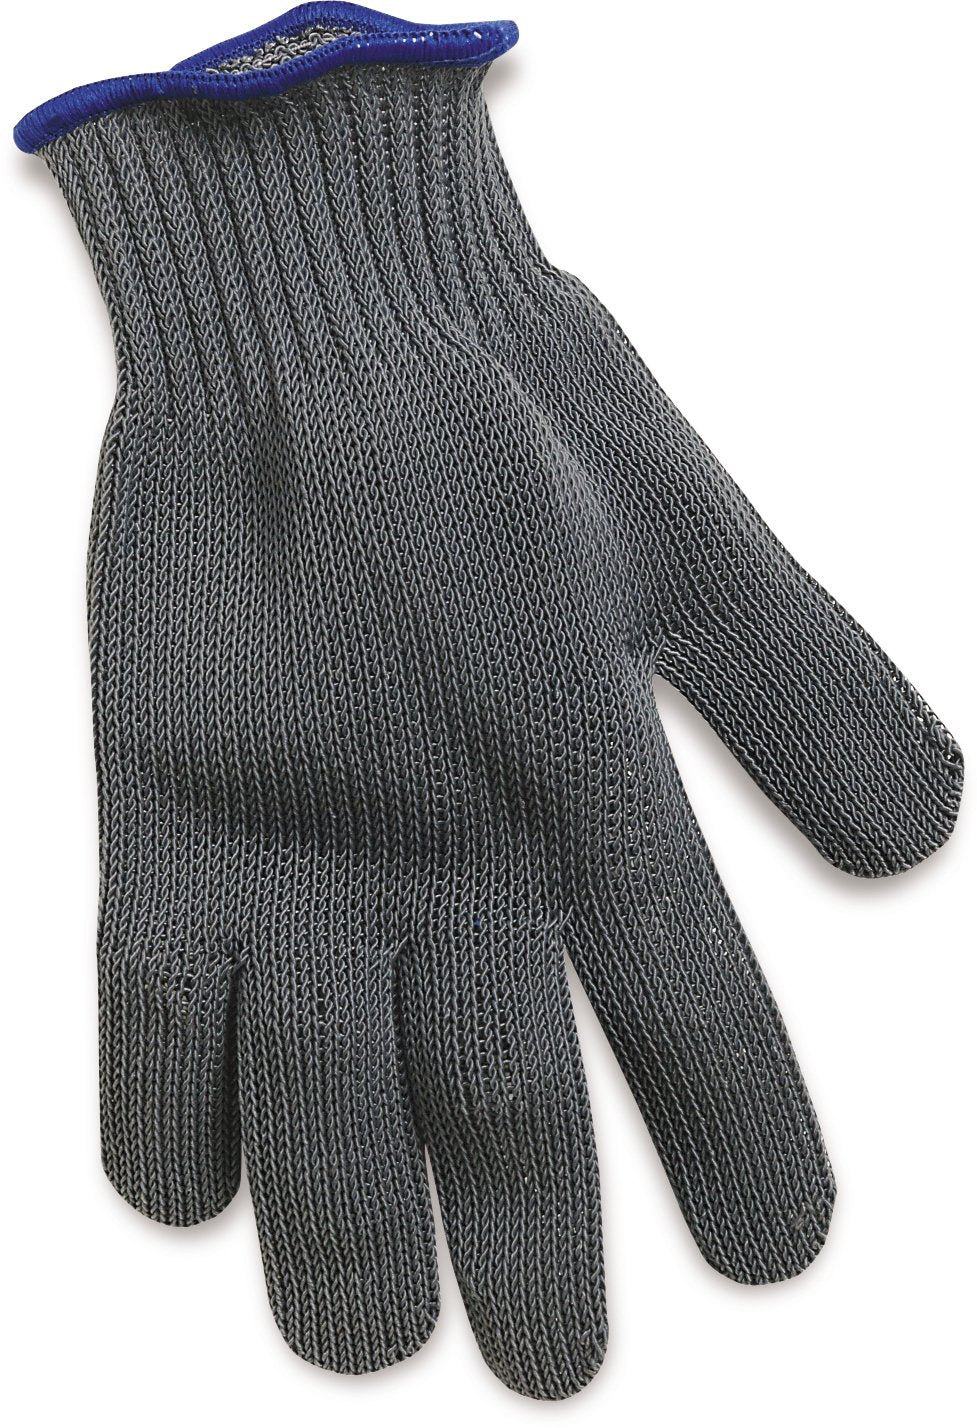 Rapala Tuff-Knit Fillet Glove - Small